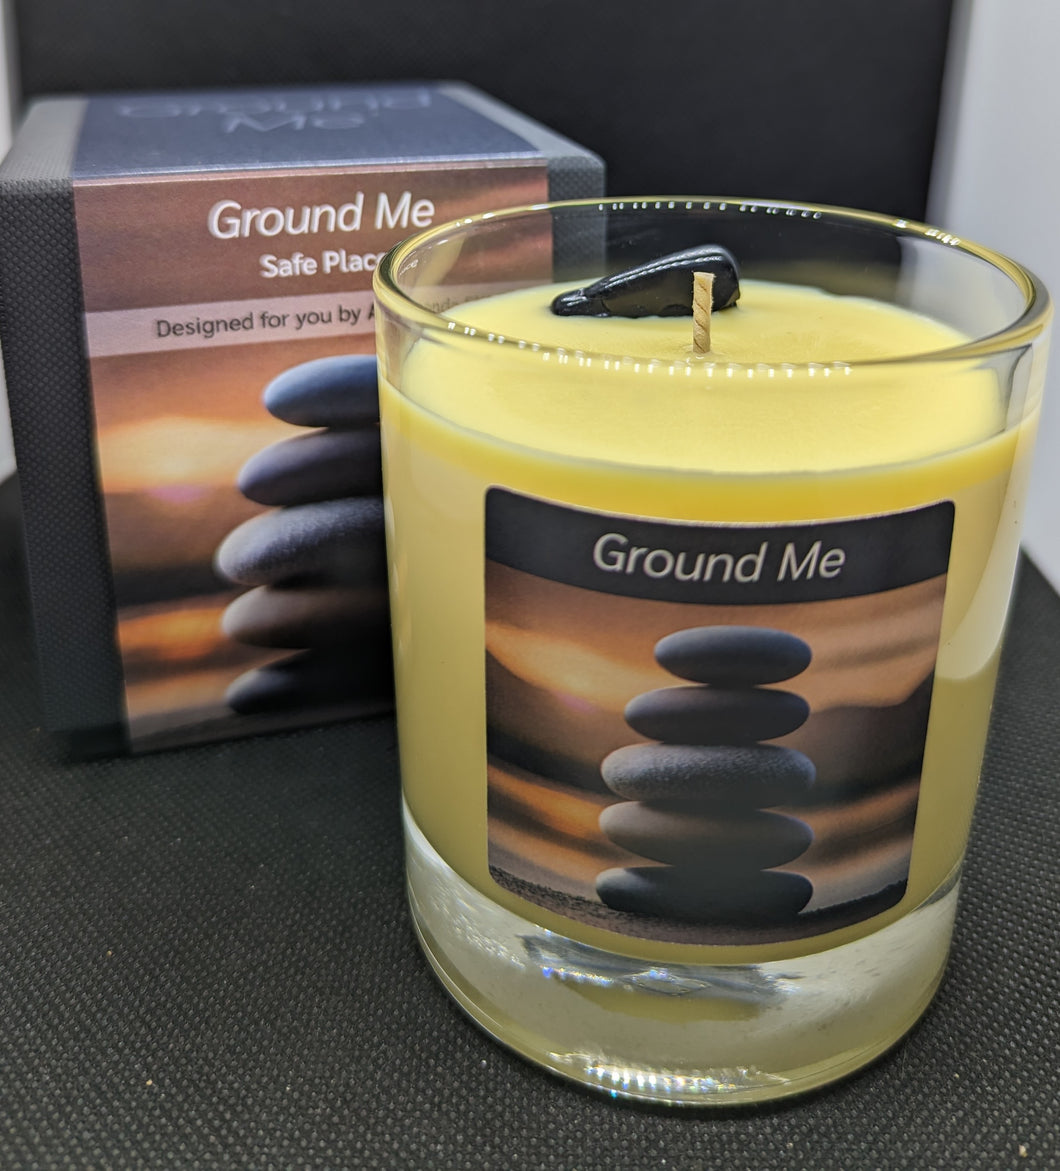 Ground Me Candle (Safe Place) - Designed by Amanda